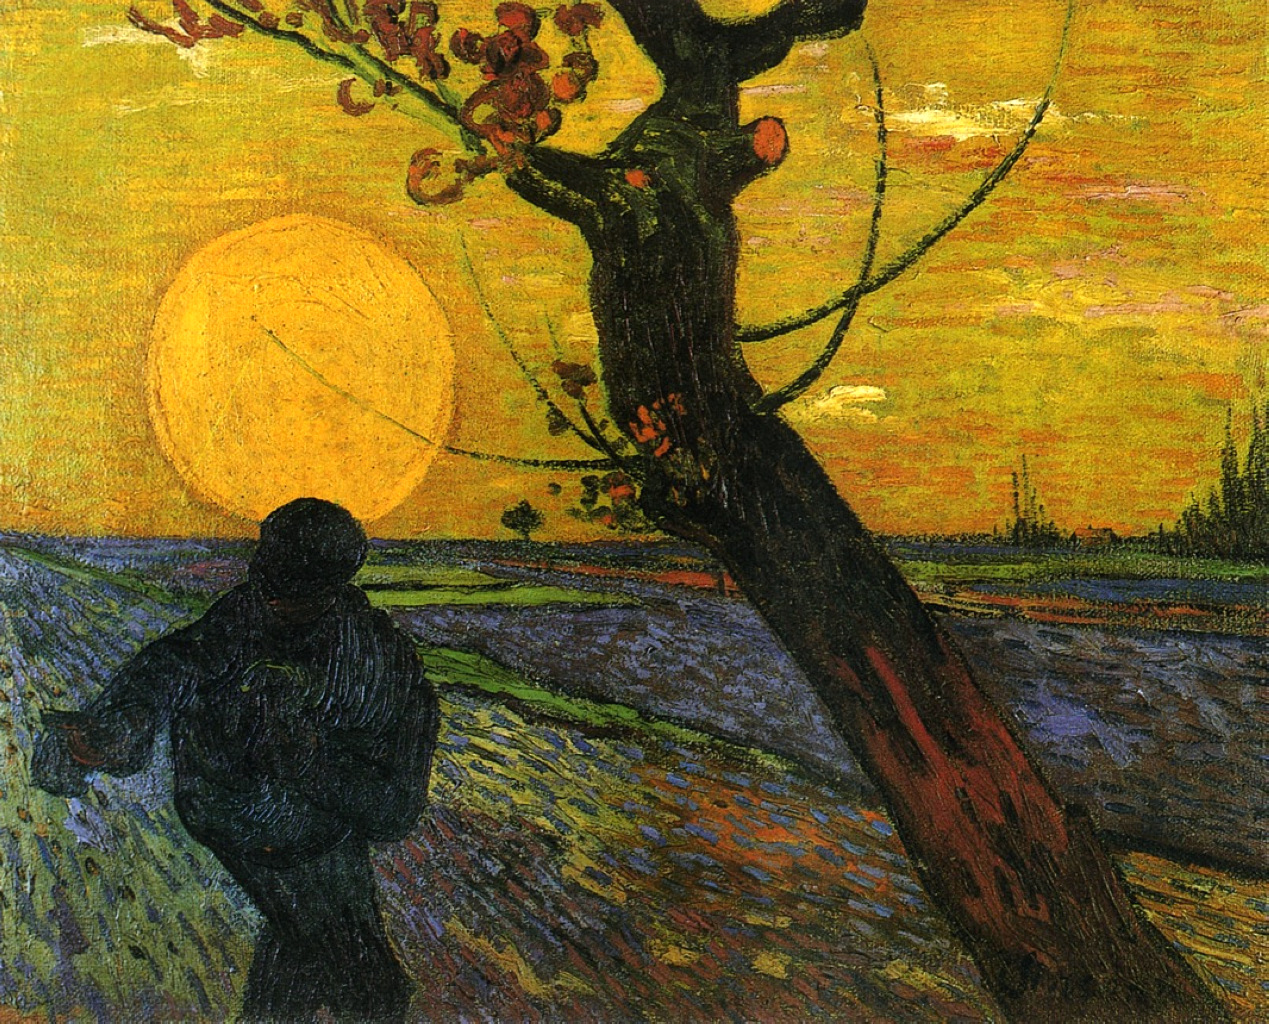 Sower with Setting Sun Van Gogh - Van Gogh Painting On Canvas